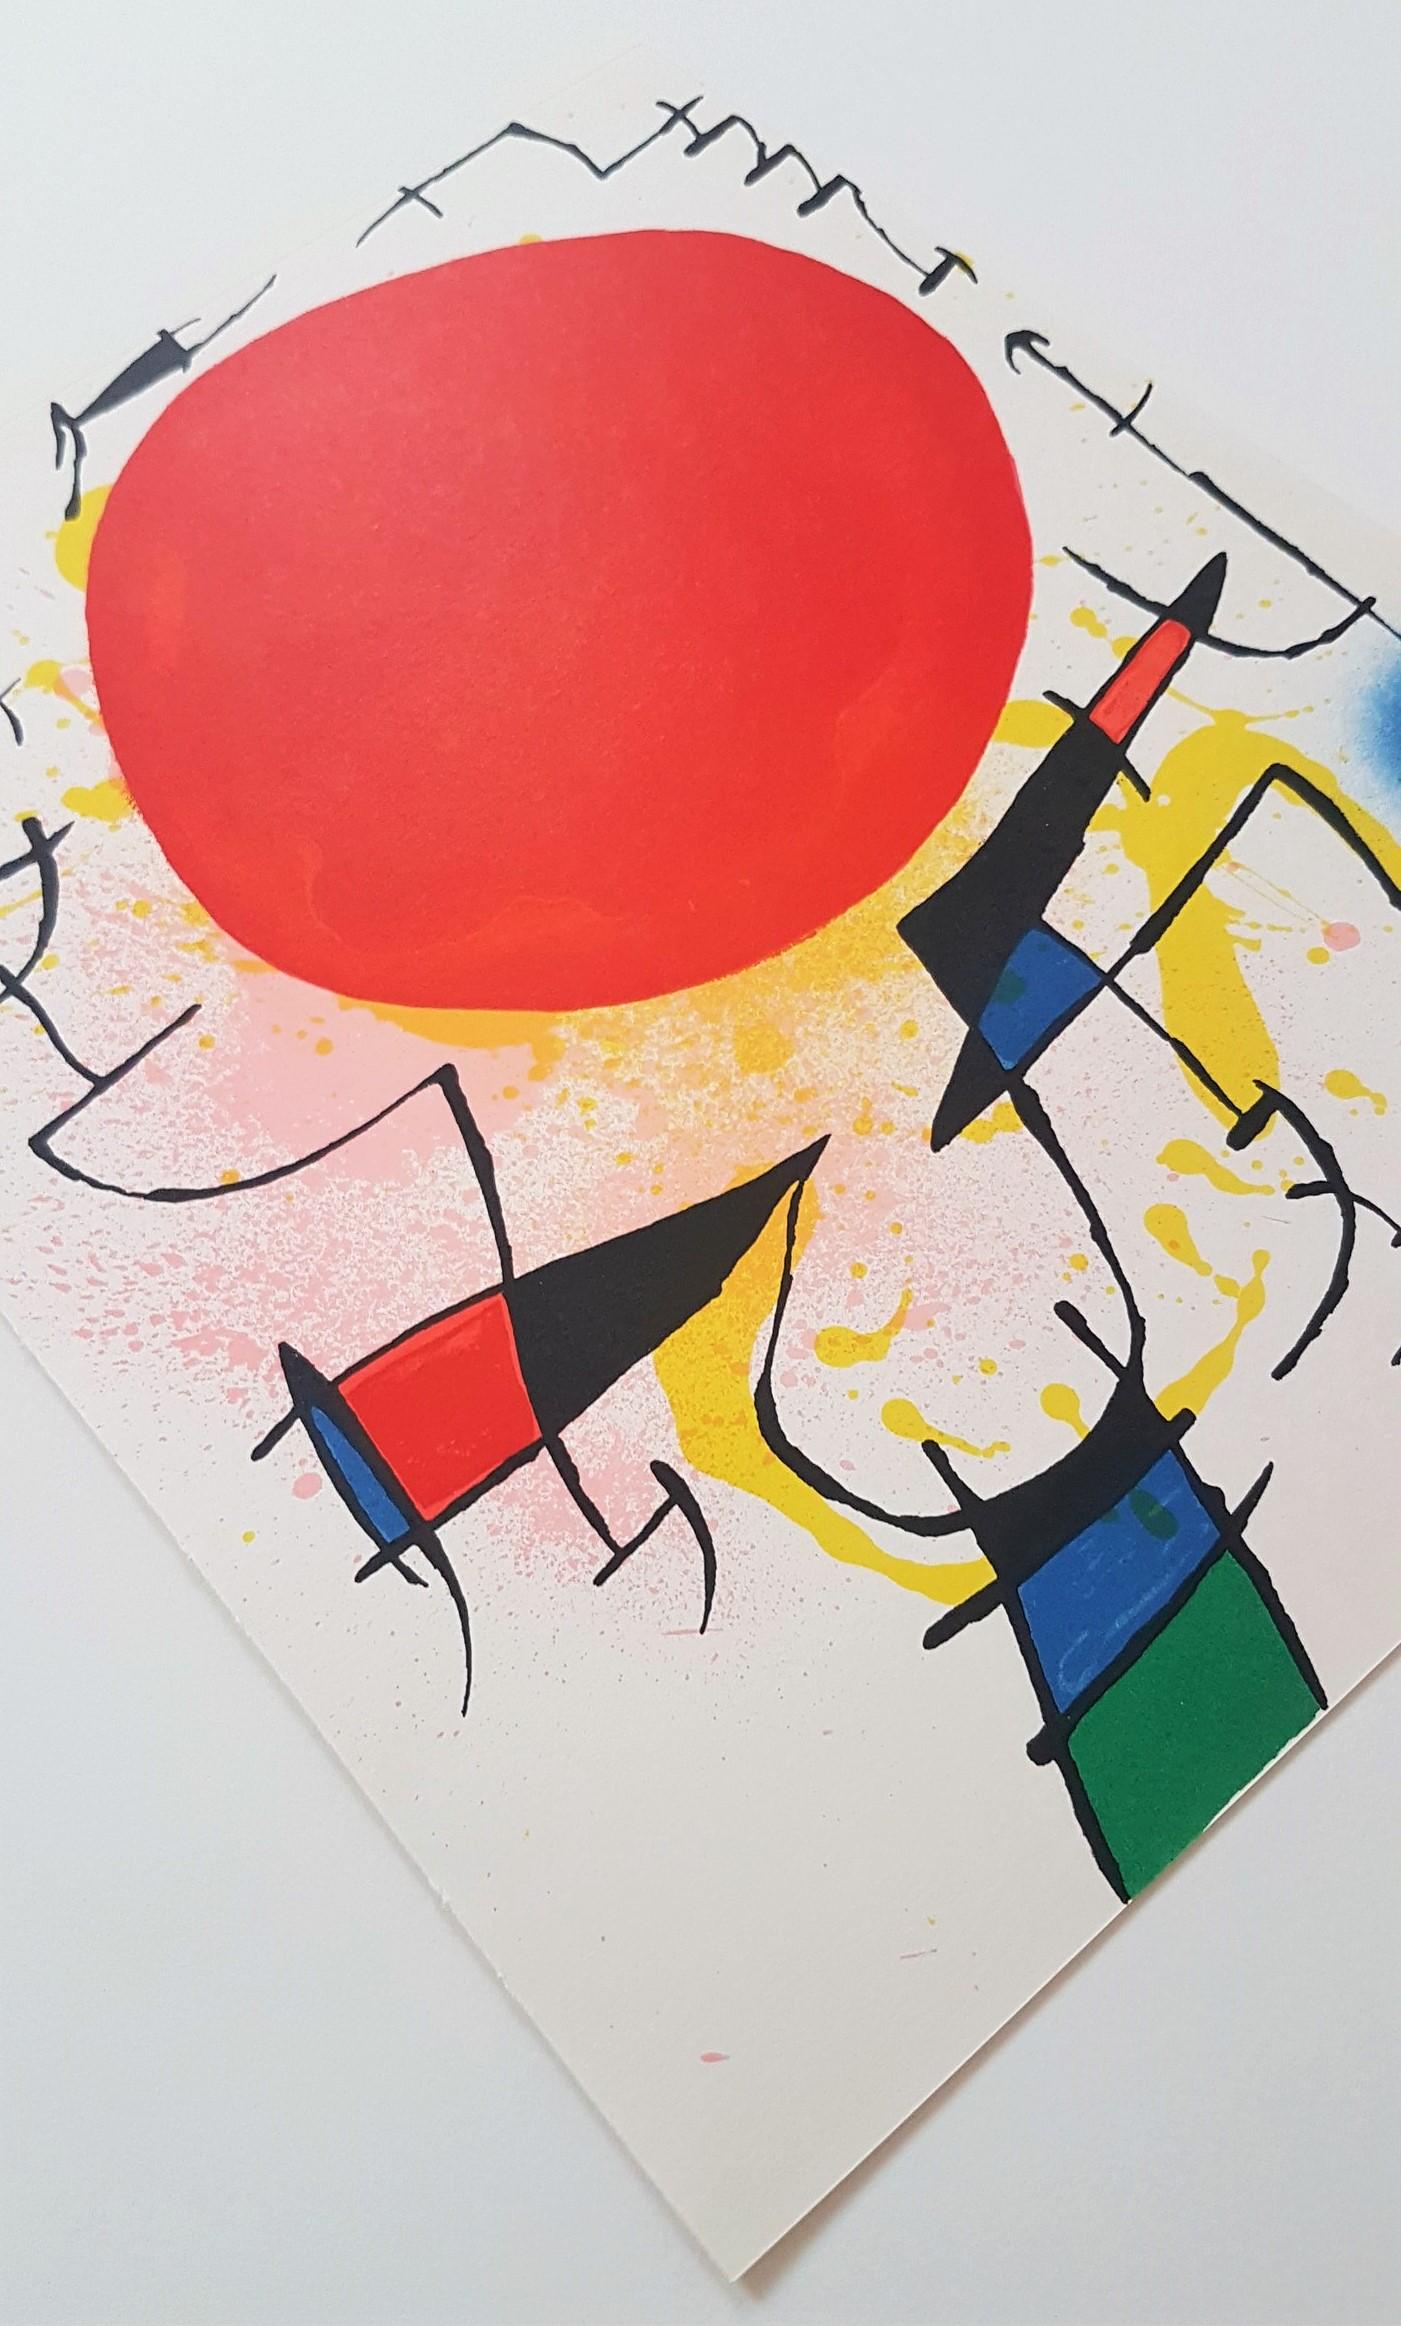 Joan Miró
Litografia Original III
Color Lithograph
Year: 1975
Size: 12.5 × 9.6 inches
Catalogue Raisonné: Queneau, Miro Lithographe II, 1952-1963, p.35
Publisher: Maeght Editeur, Paris, France 
Verso: Typographically annotated: 'Joan Miro -